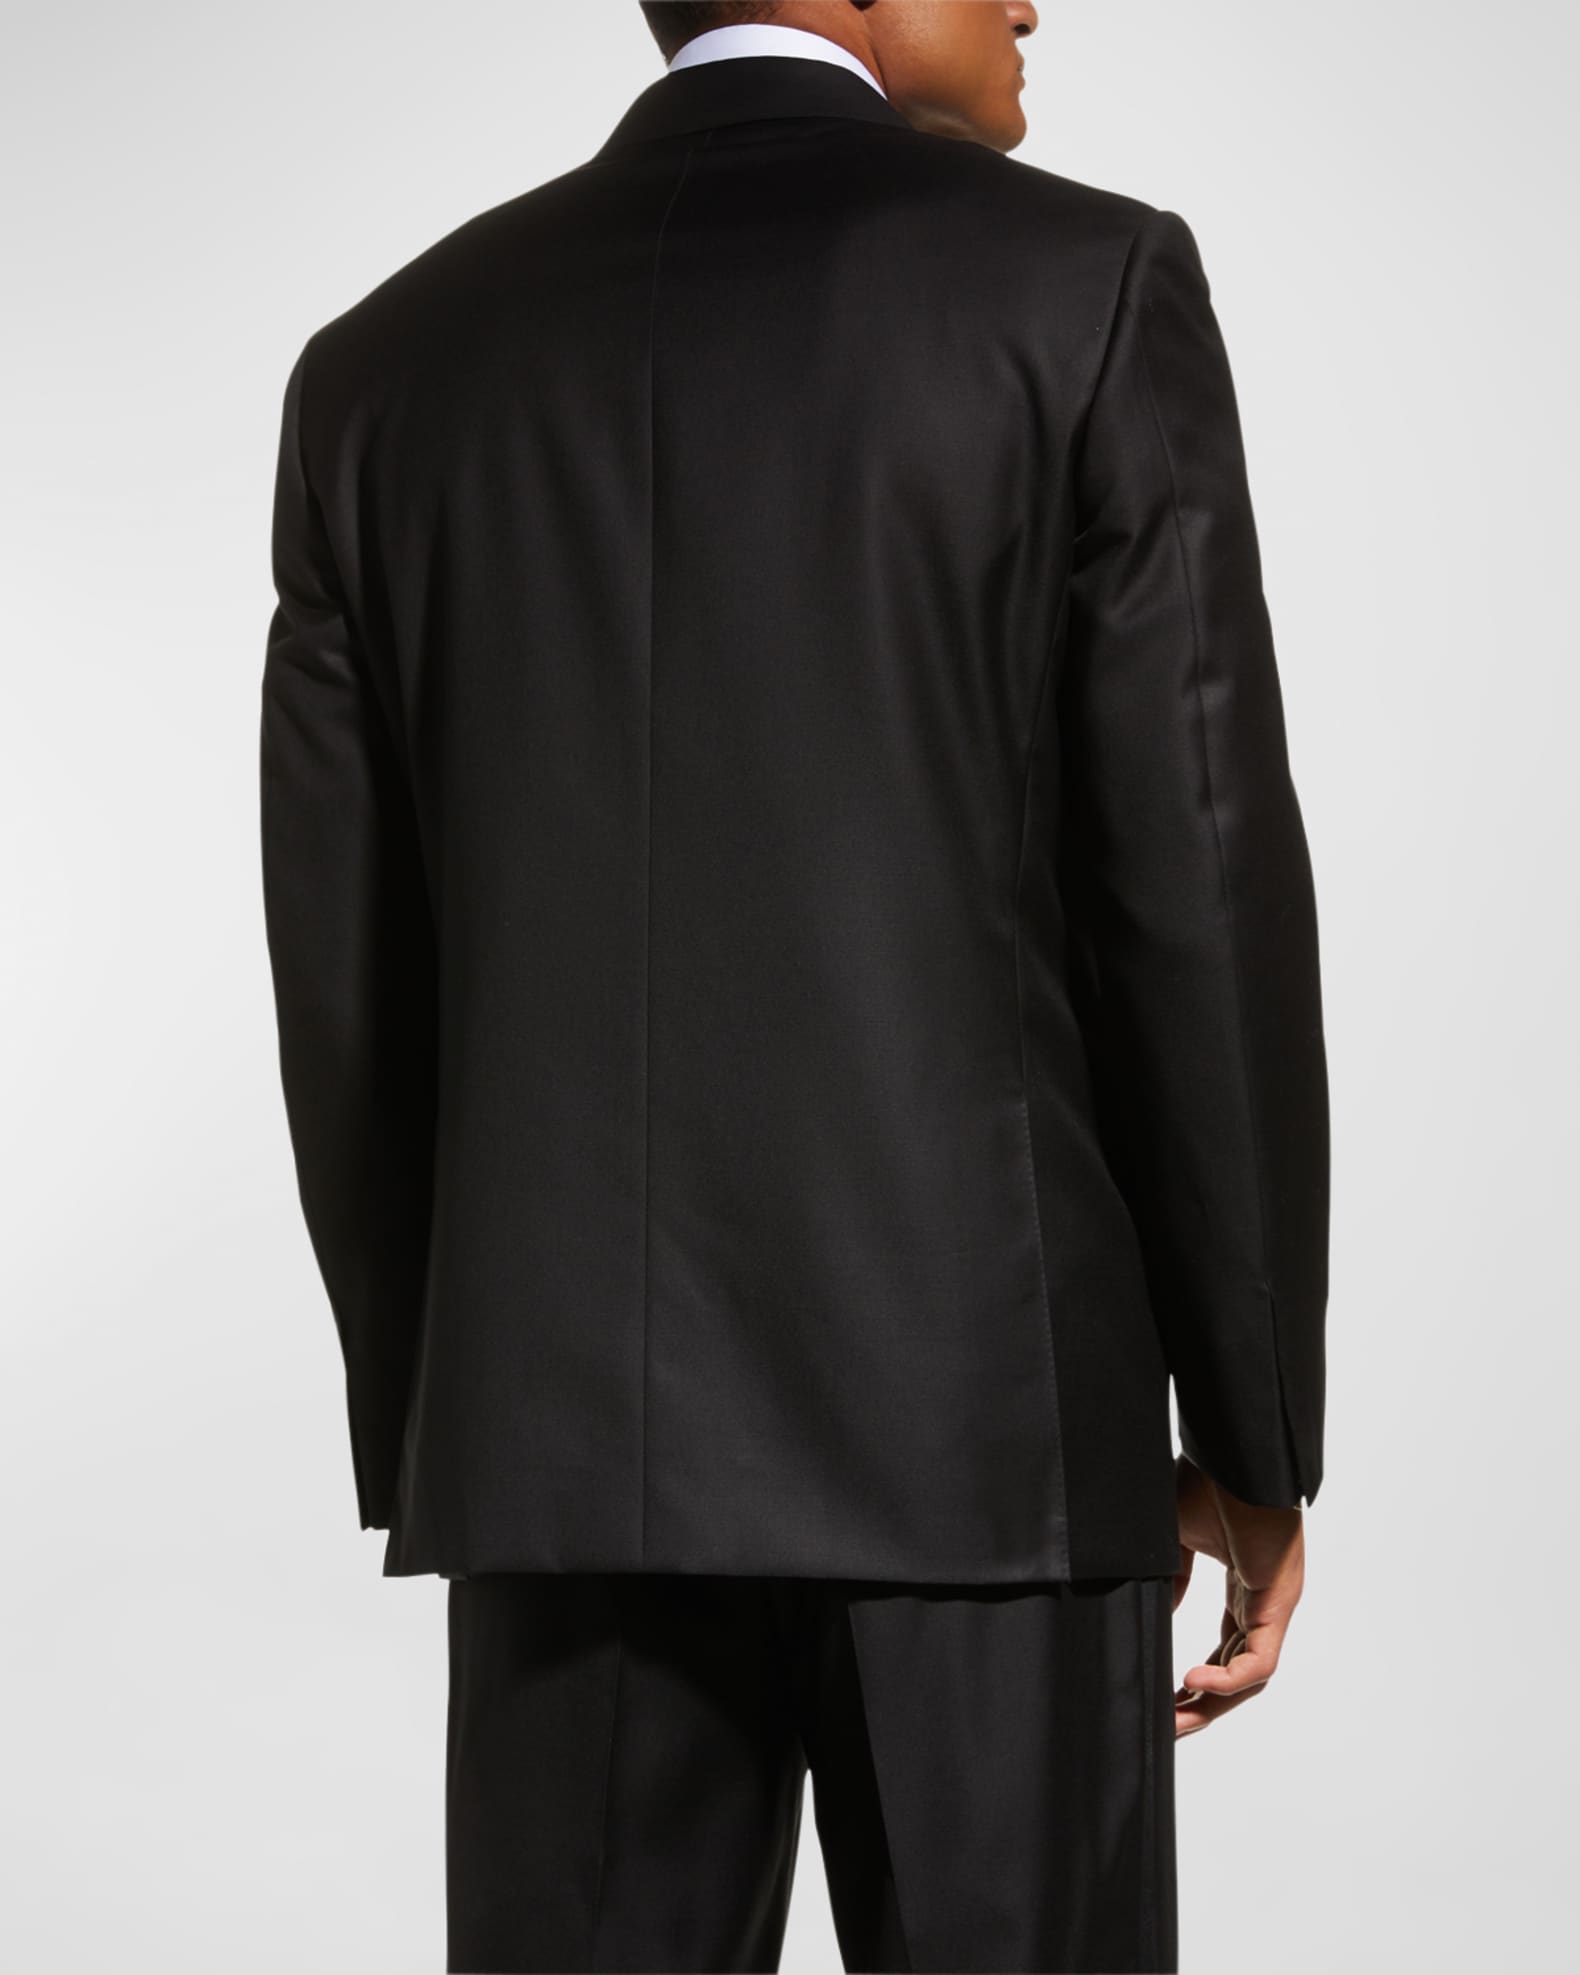 Canali Wool Two-Piece Tuxedo Suit | Neiman Marcus